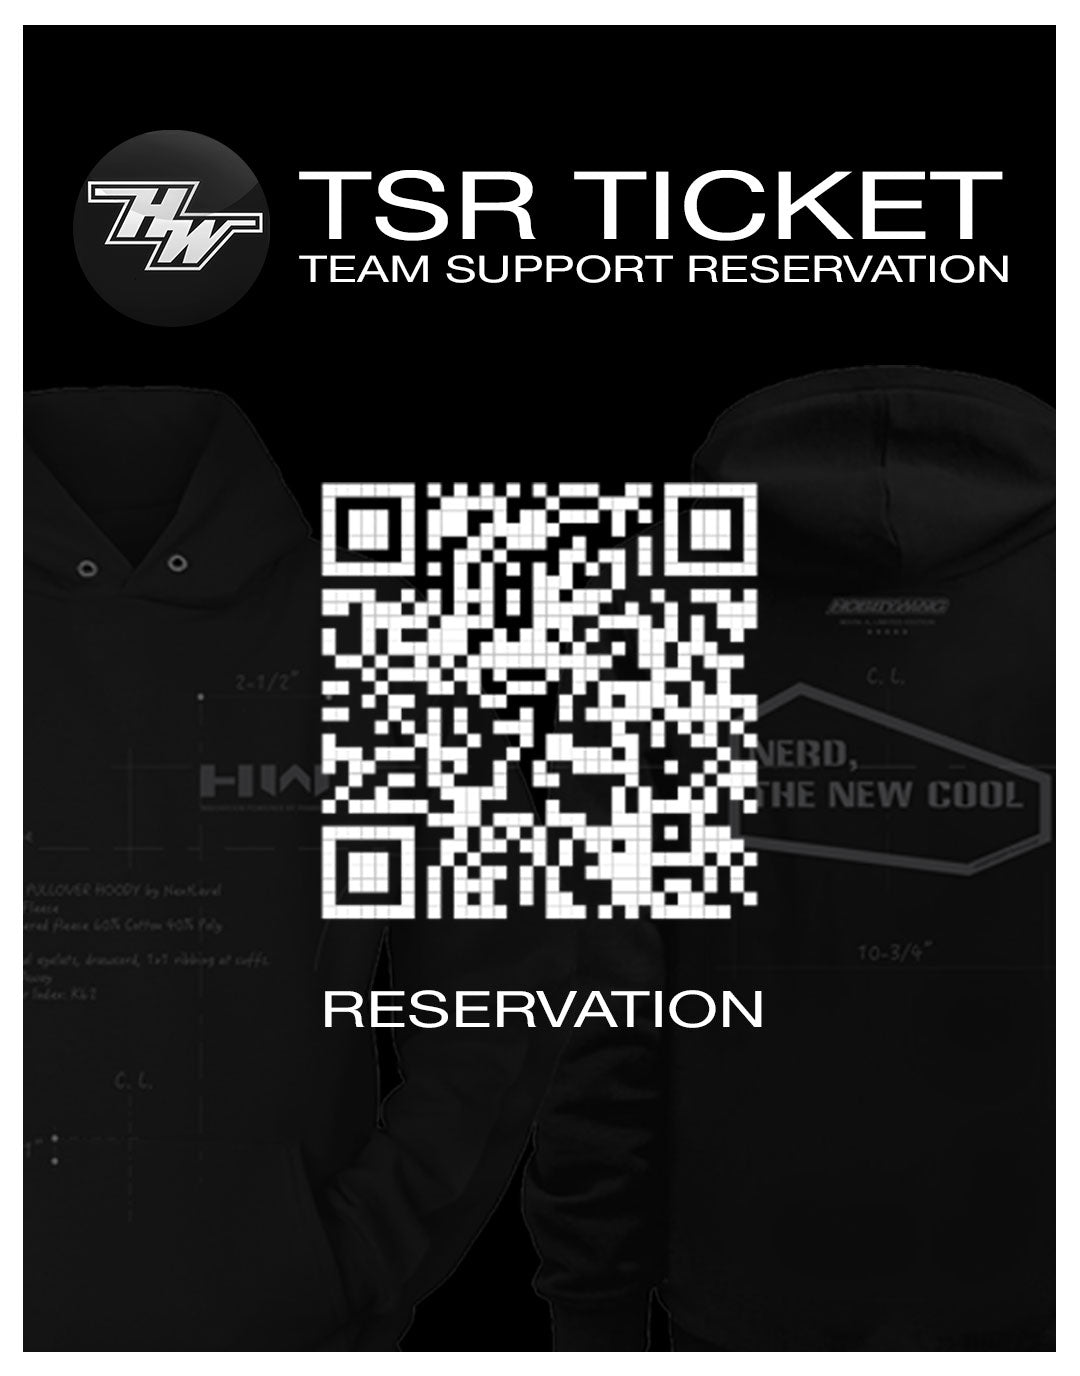 Team Support Reservation Ticket (TSRT)